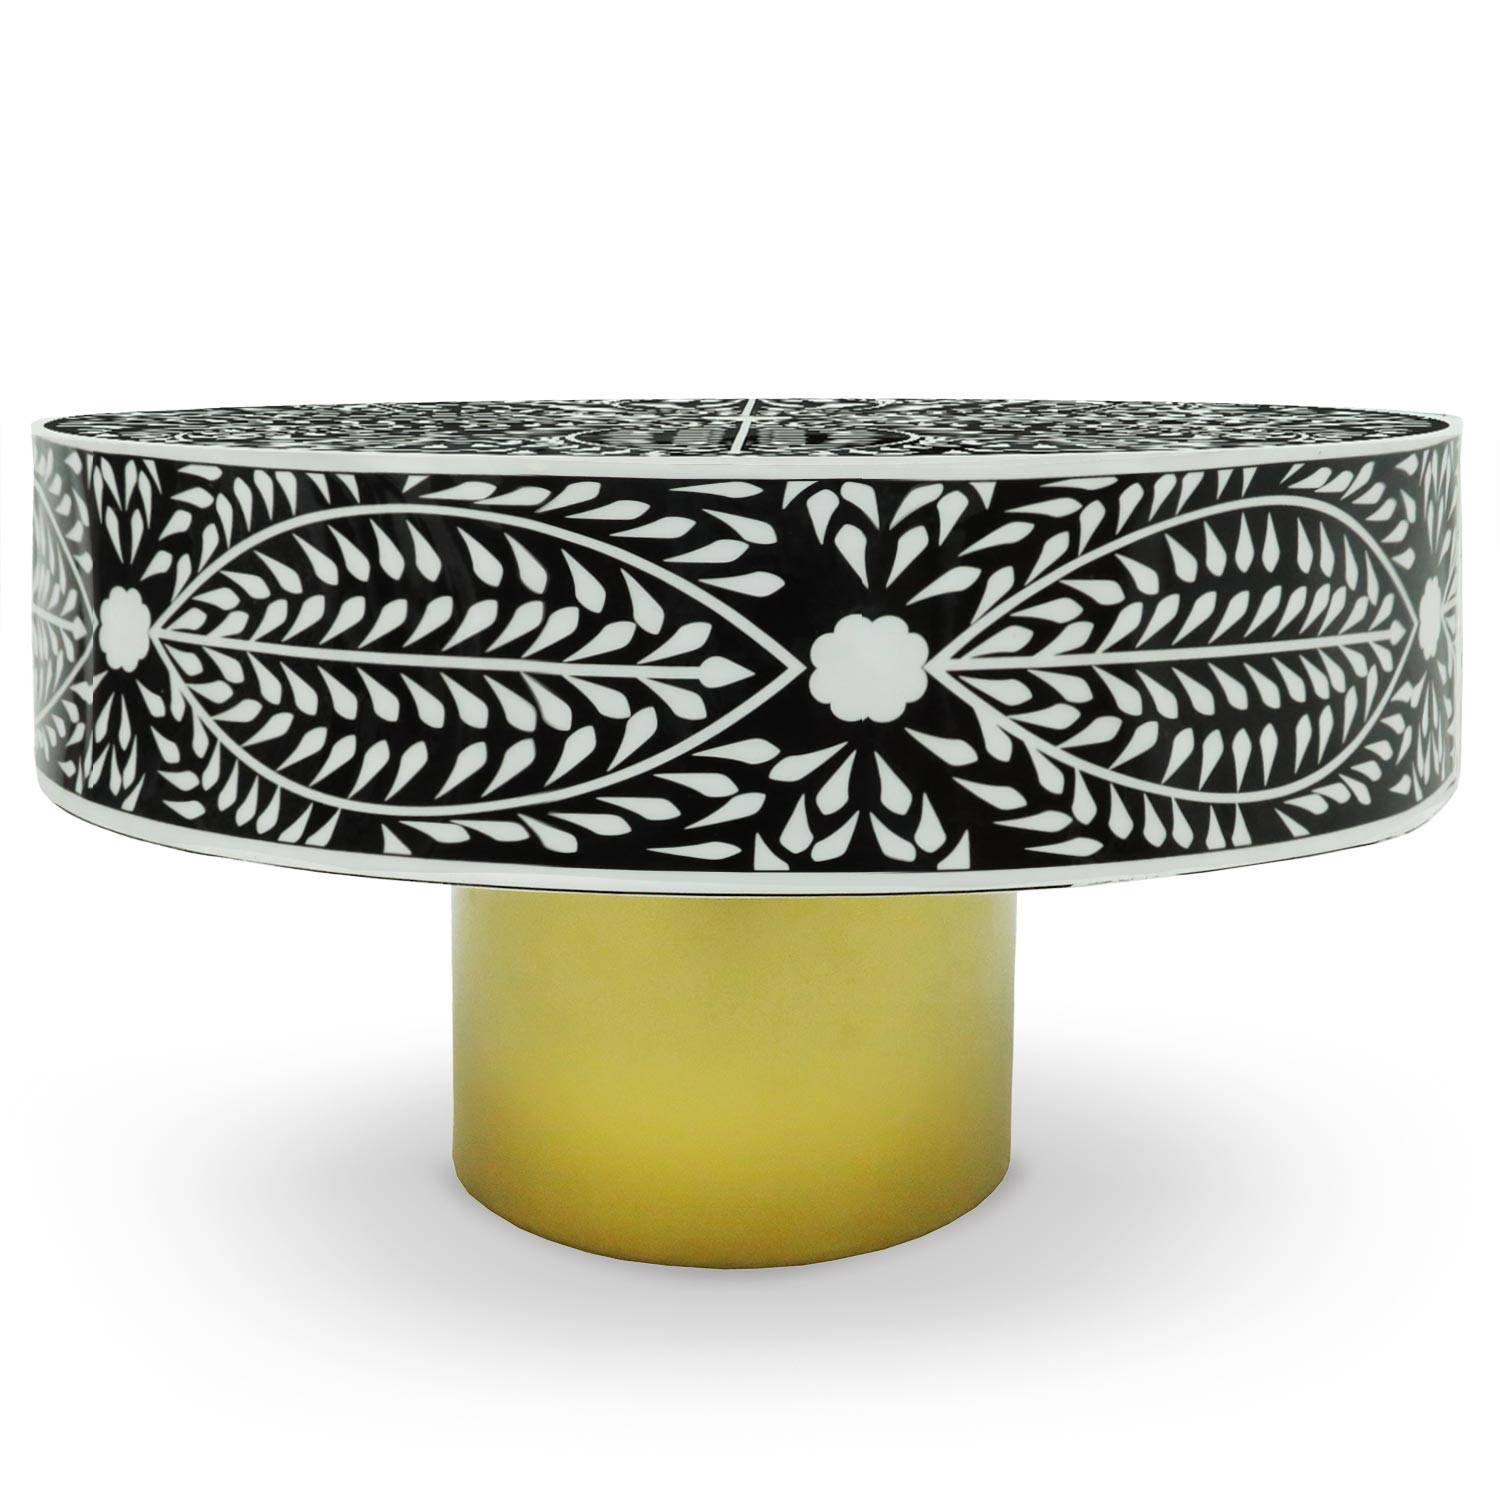 Tavolino rotondo in stile arty Ø71cm Viliana Motivo floreale bianco e nero e base dorata